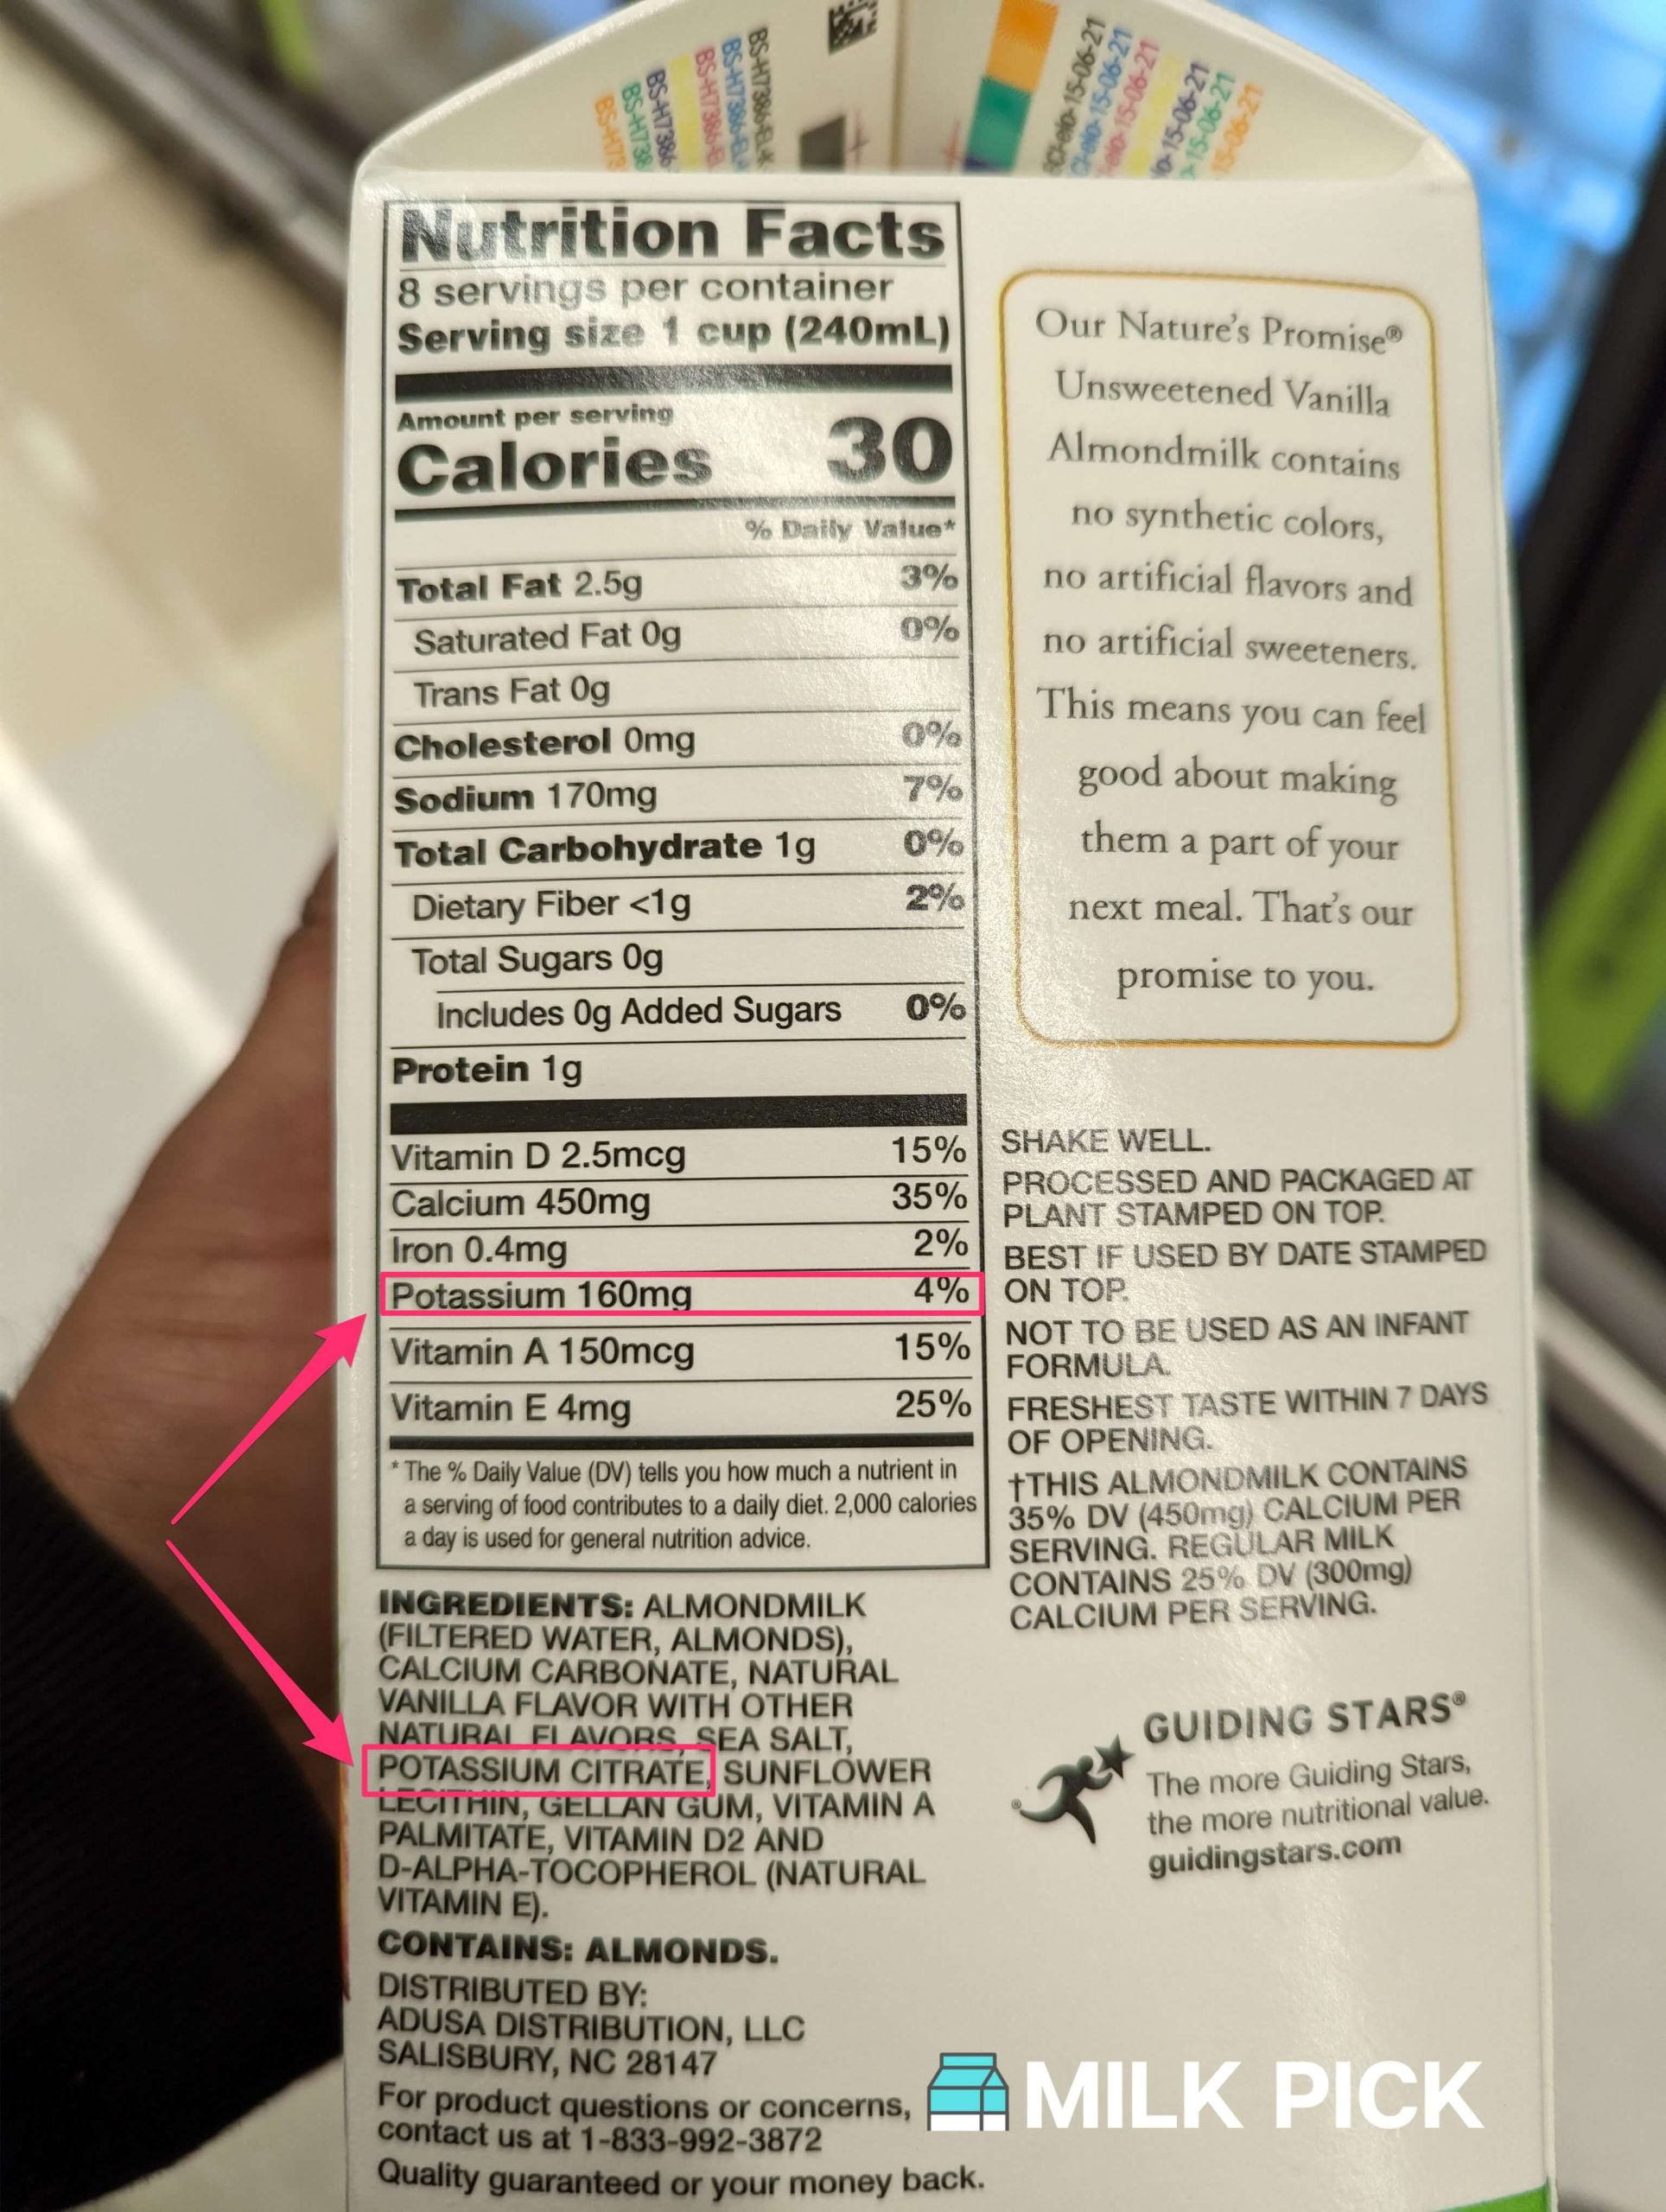 aldi vanilla almond milk nutrition facts highlighting potassium and potassium citrate